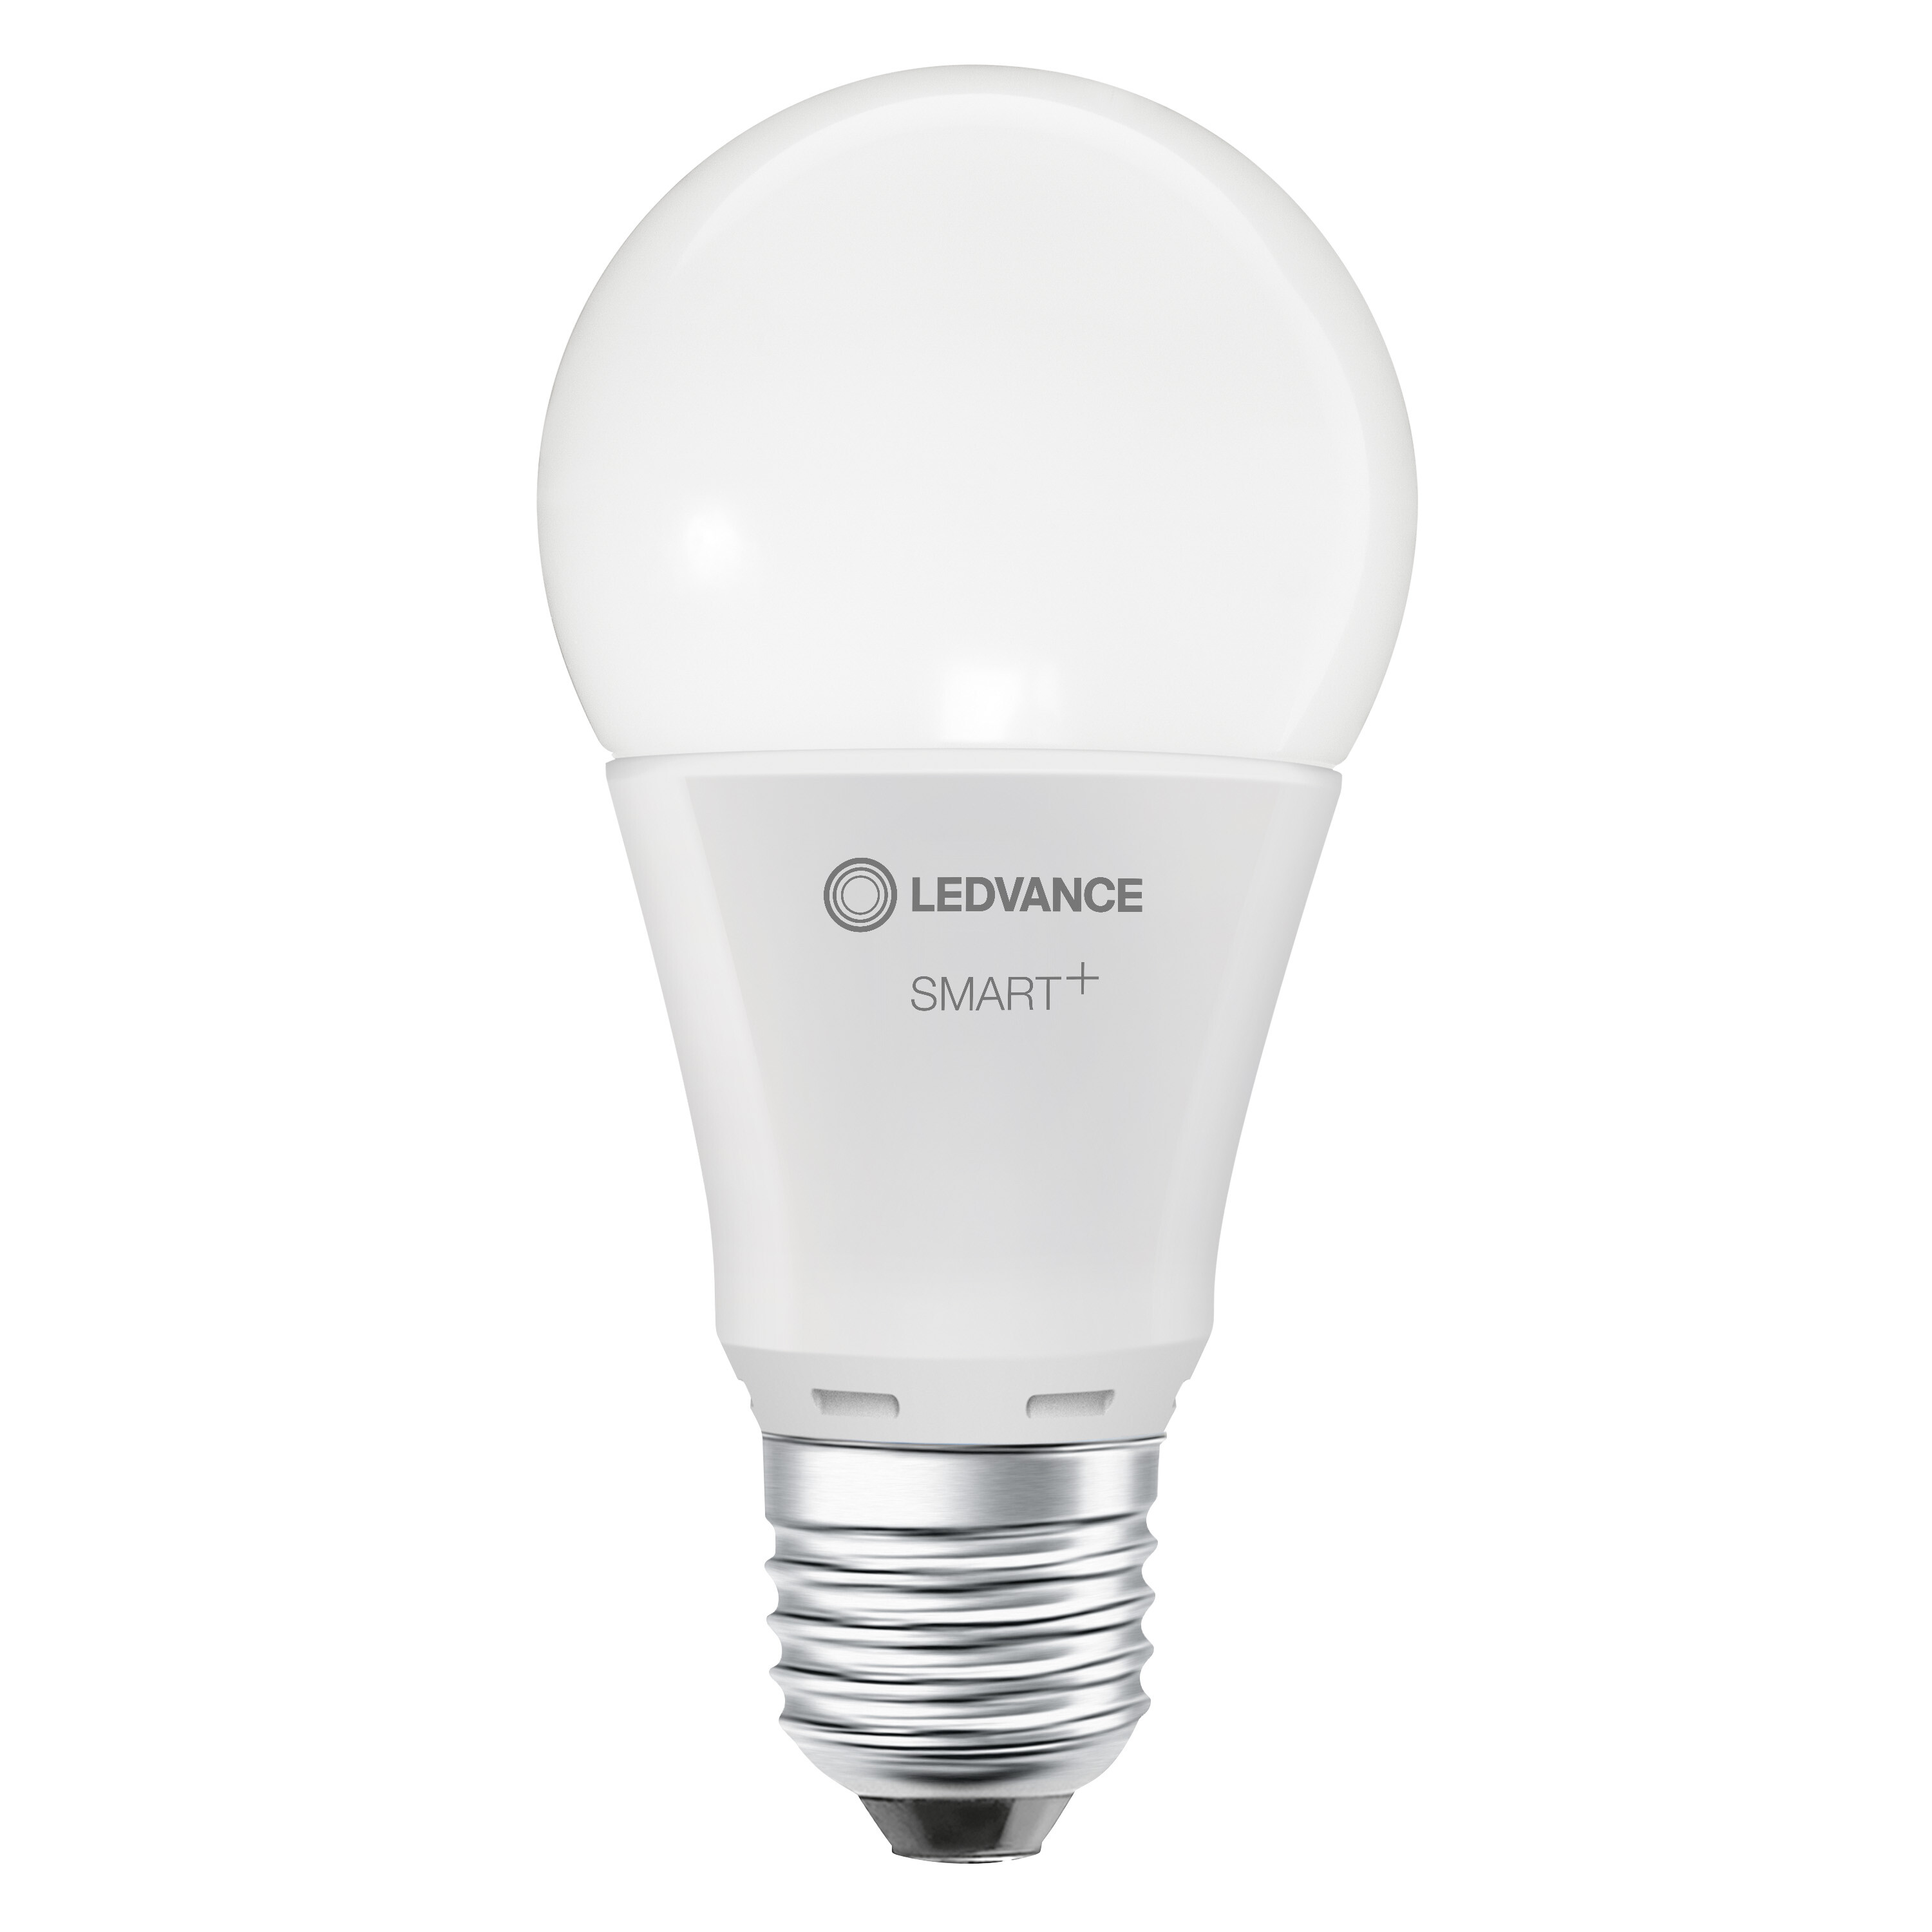 LEDVANCE SMART+ WiFi Dimmable Lampe Warmweiß Classic LED Smarte